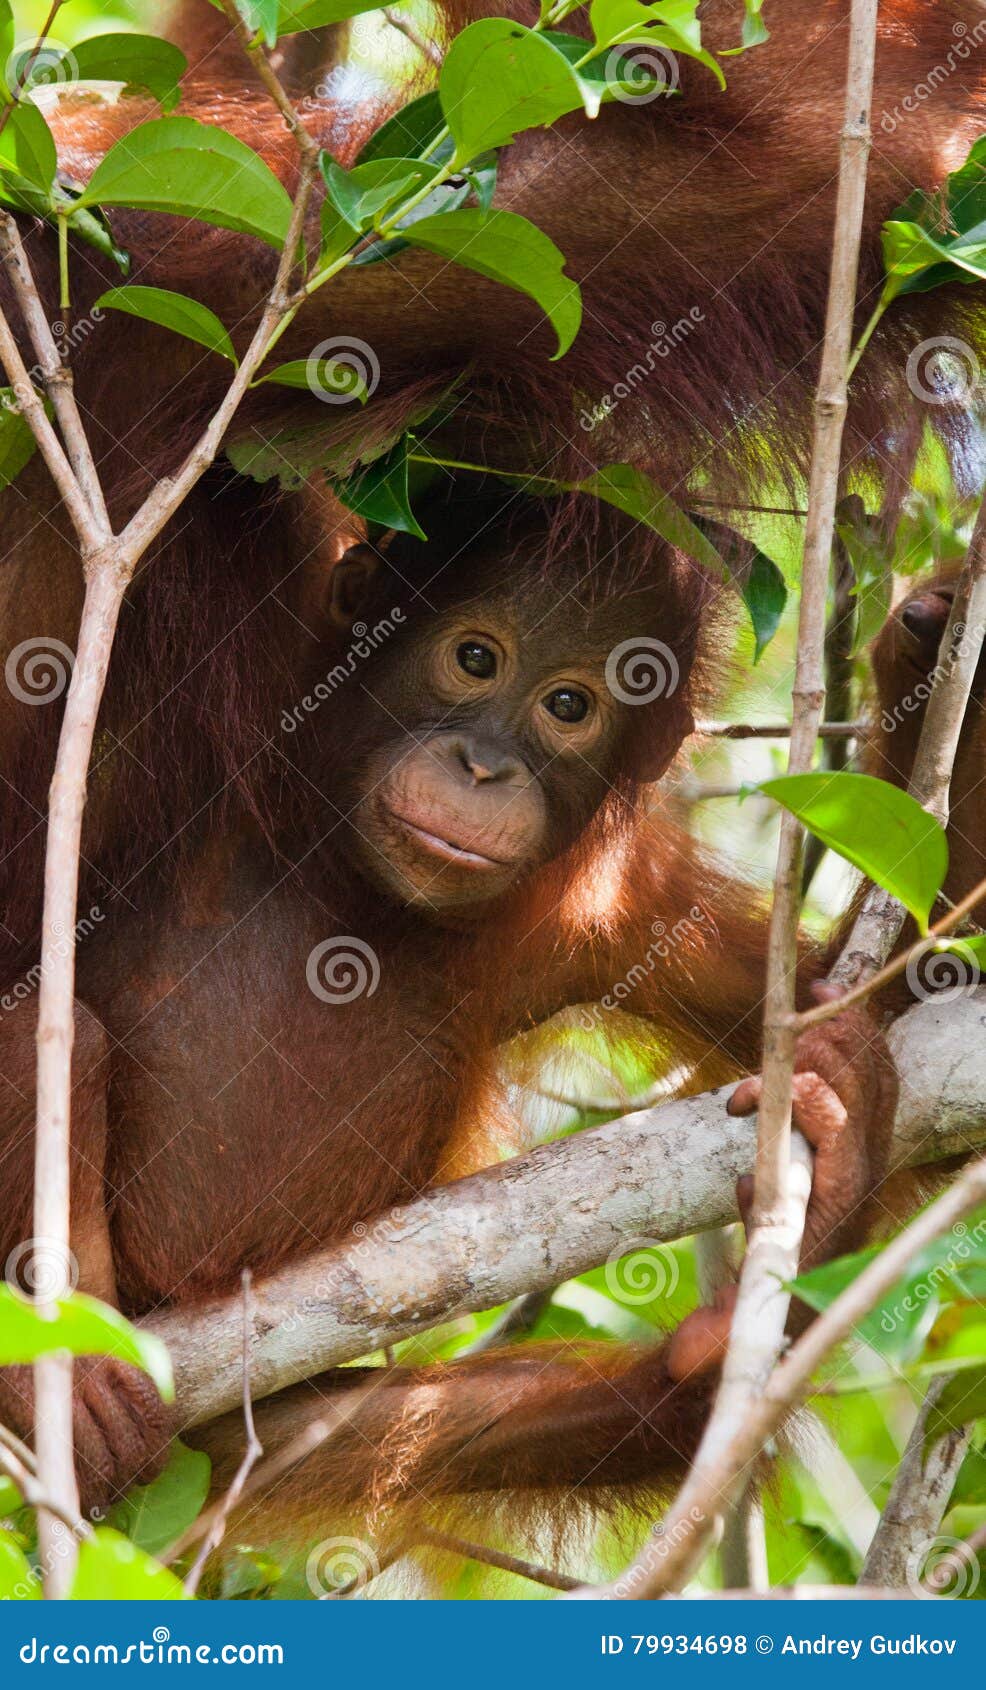 1,132 Orangutan Close Up Stock Photos - Free & Royalty-Free Stock Photos  from Dreamstime